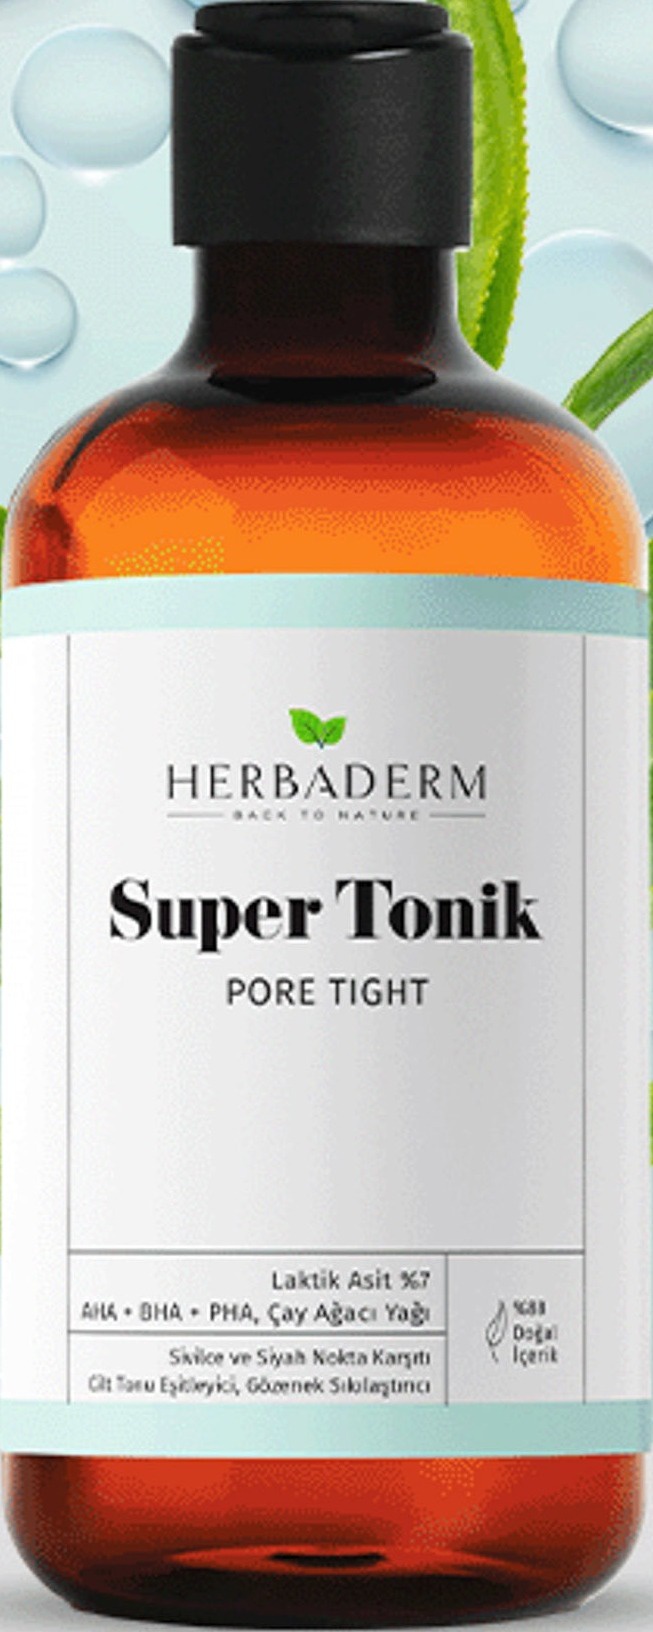 Herbaderm Pore Tight Tonic